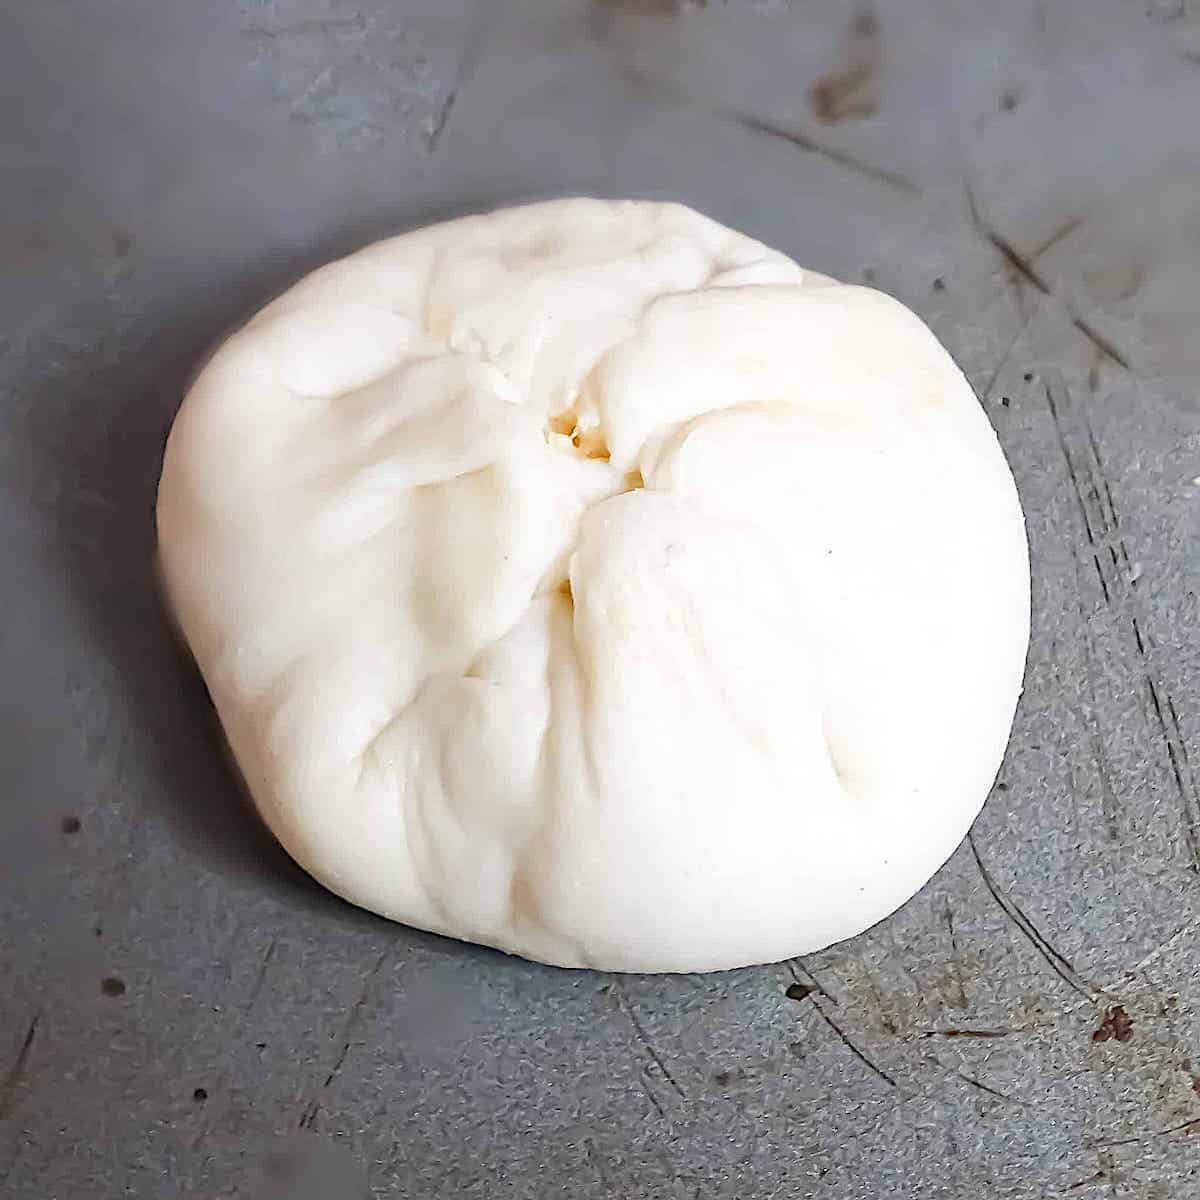 dough shaped into a ball on a baking sheet